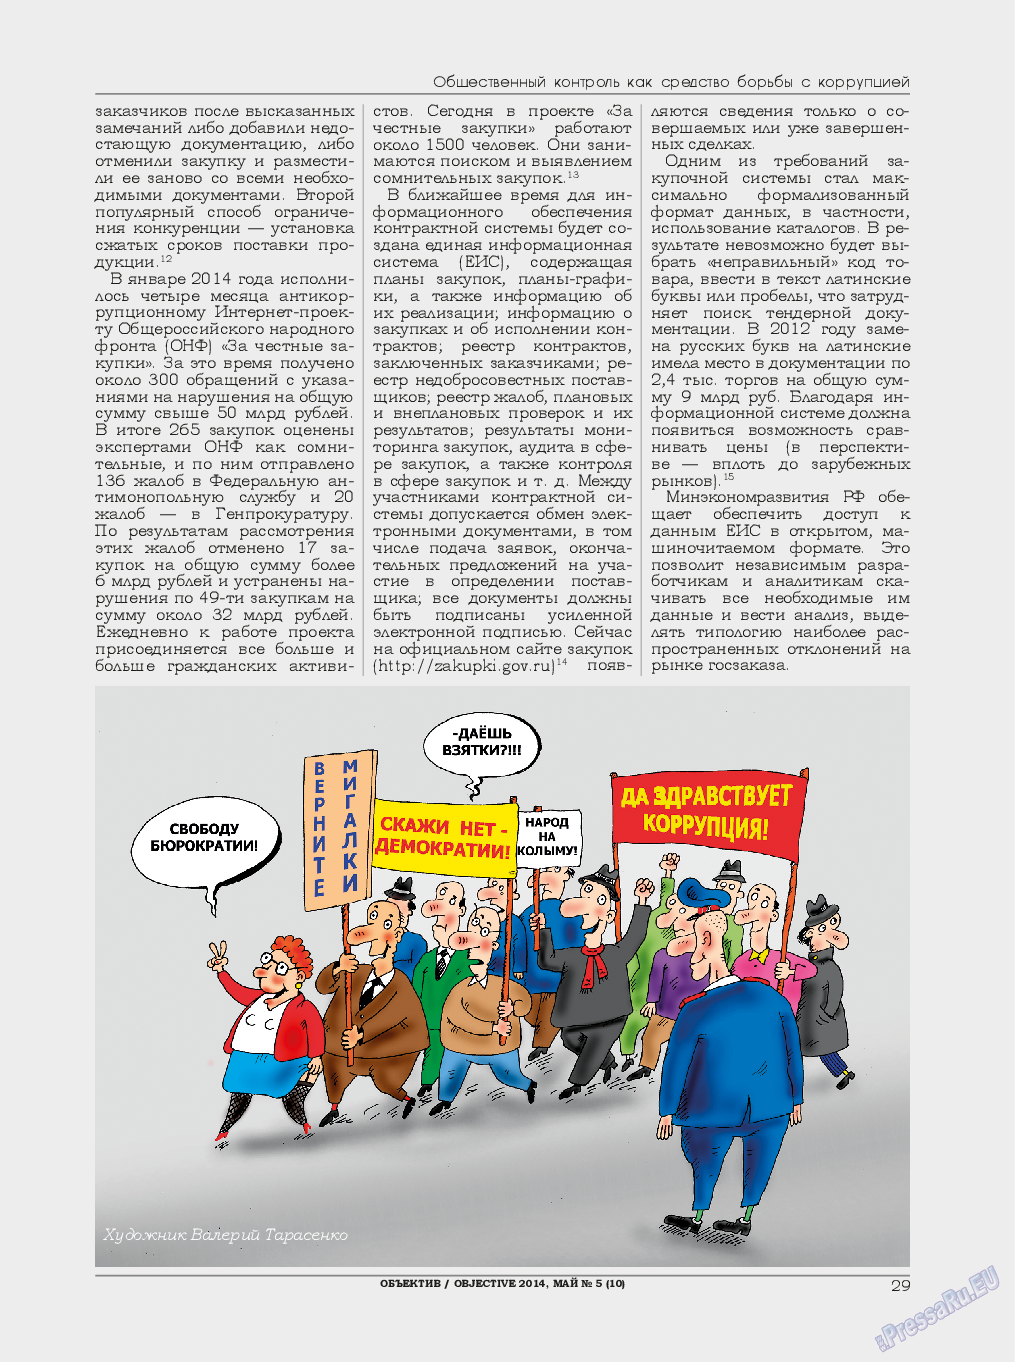 Объектив EU, журнал. 2014 №5 стр.29